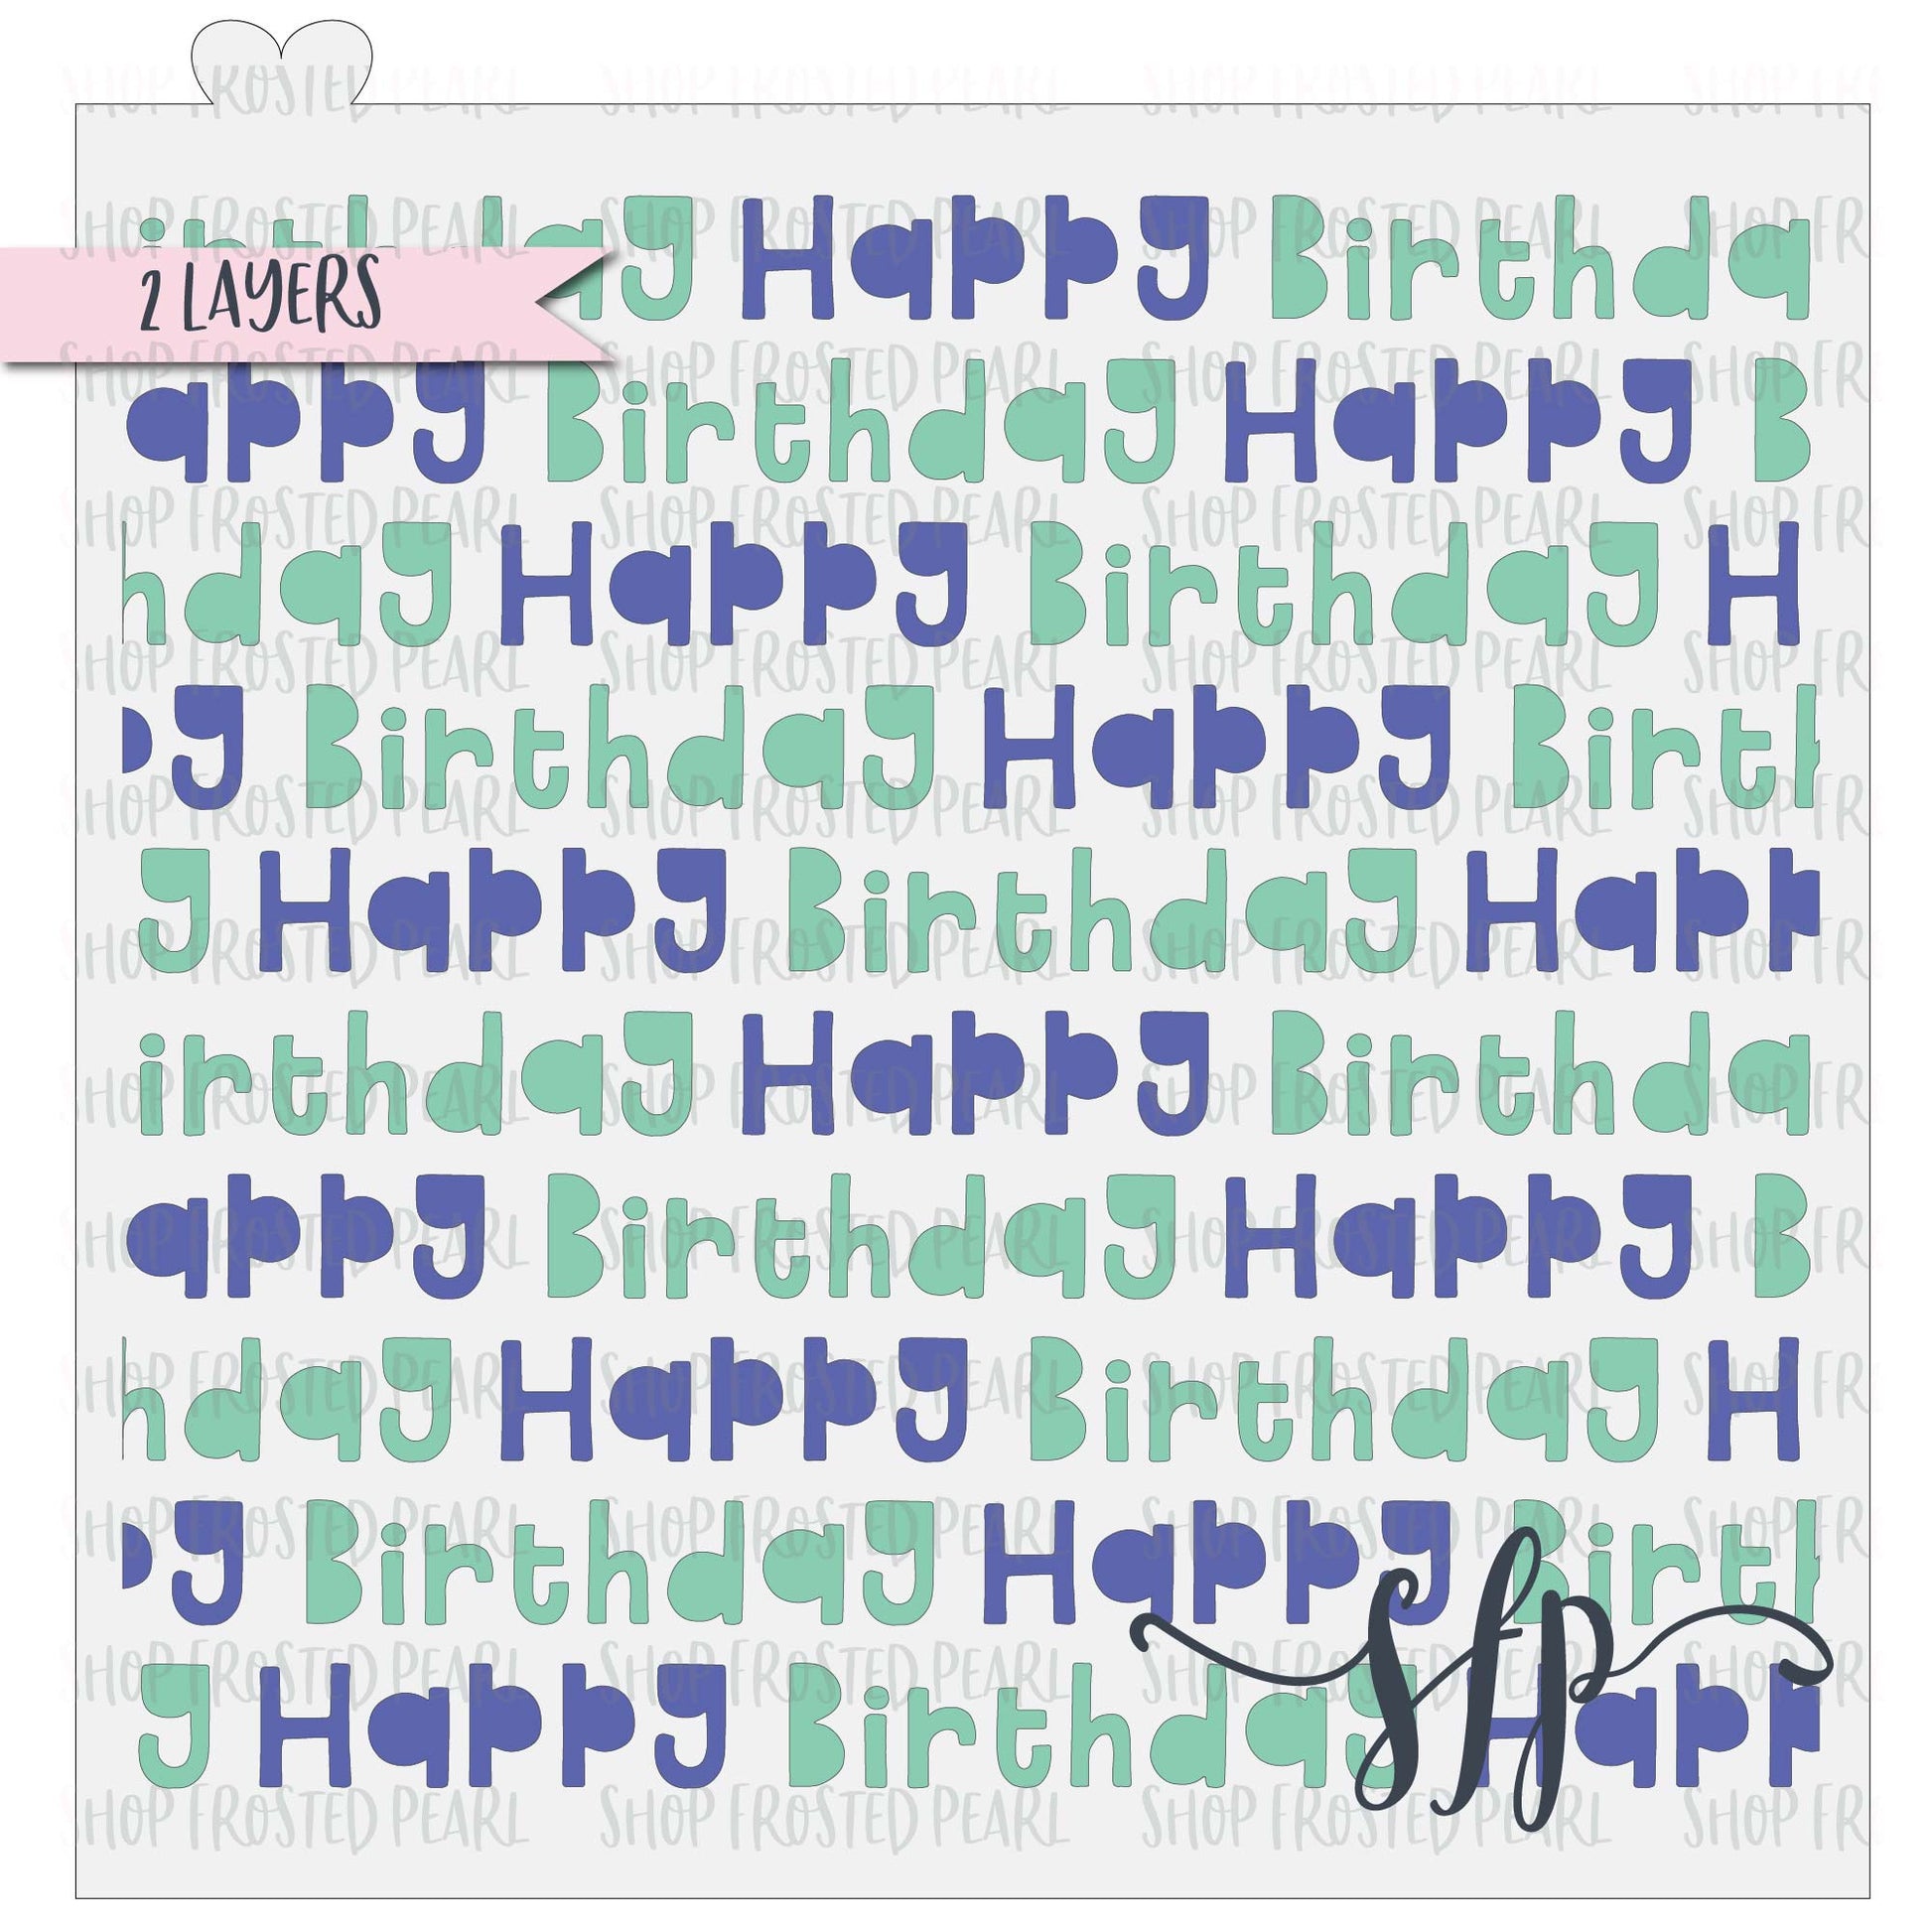 Happy Birthday stencil in 2 layers.